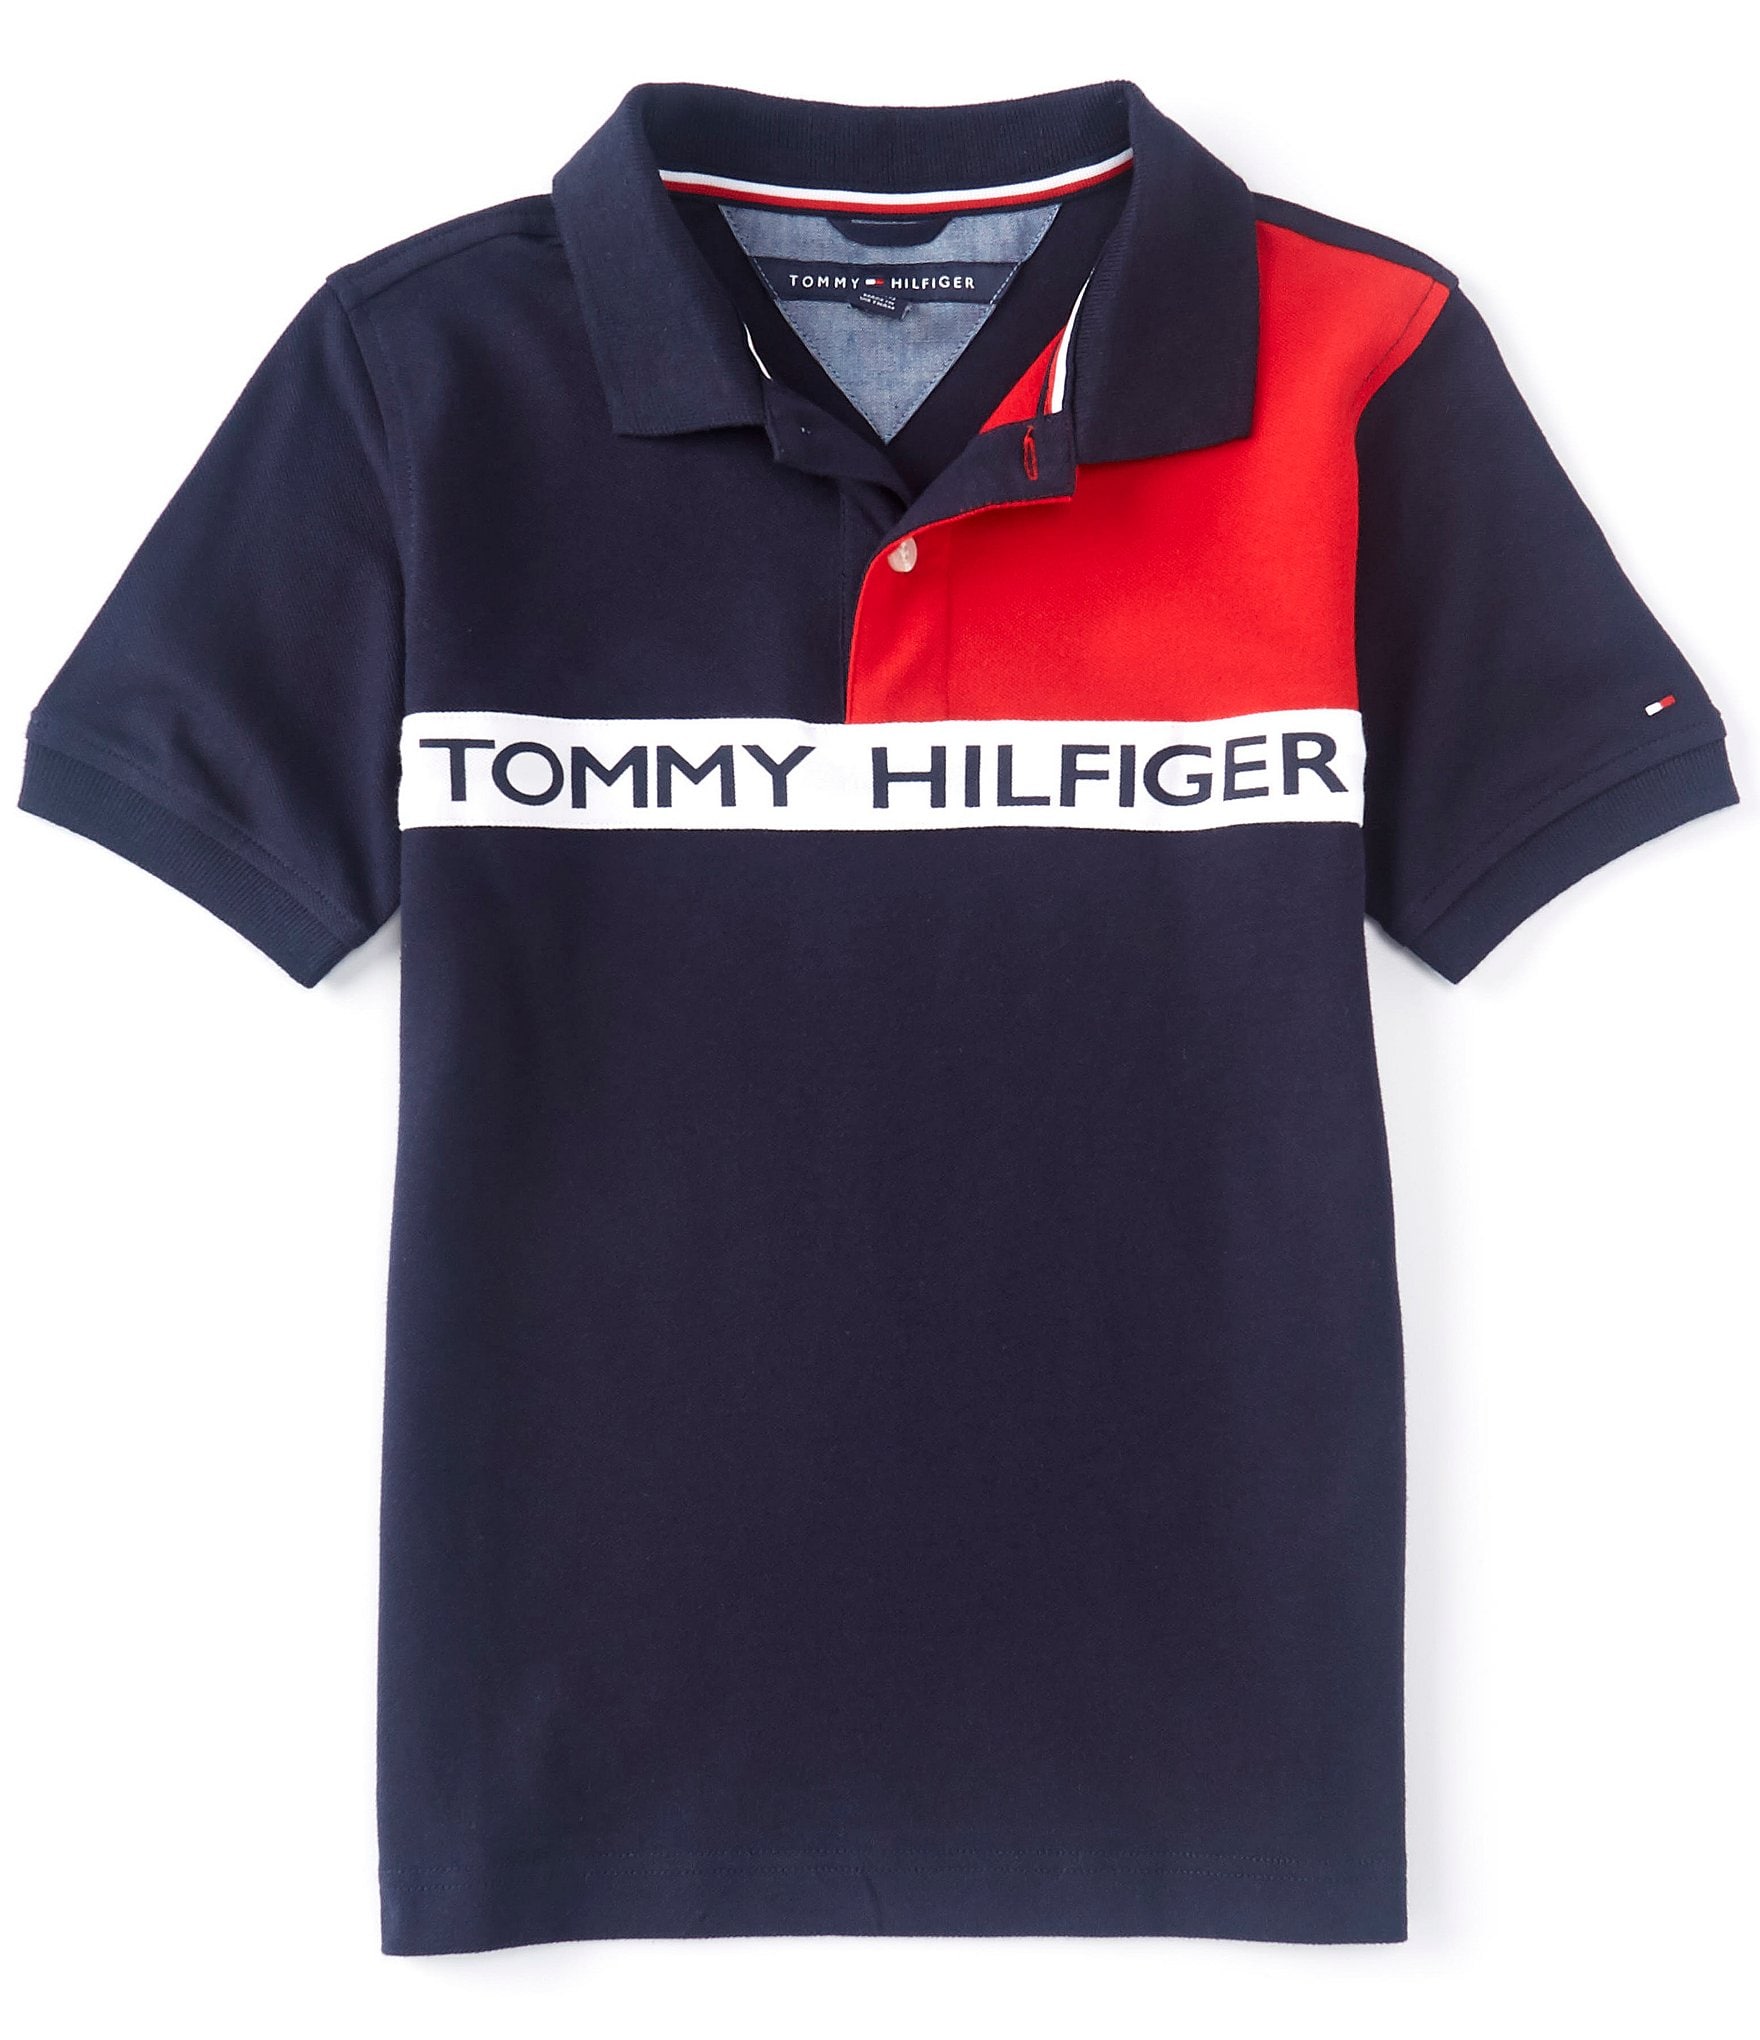 TOMMY HILFIGER - Men's wavy flag polo shirt 